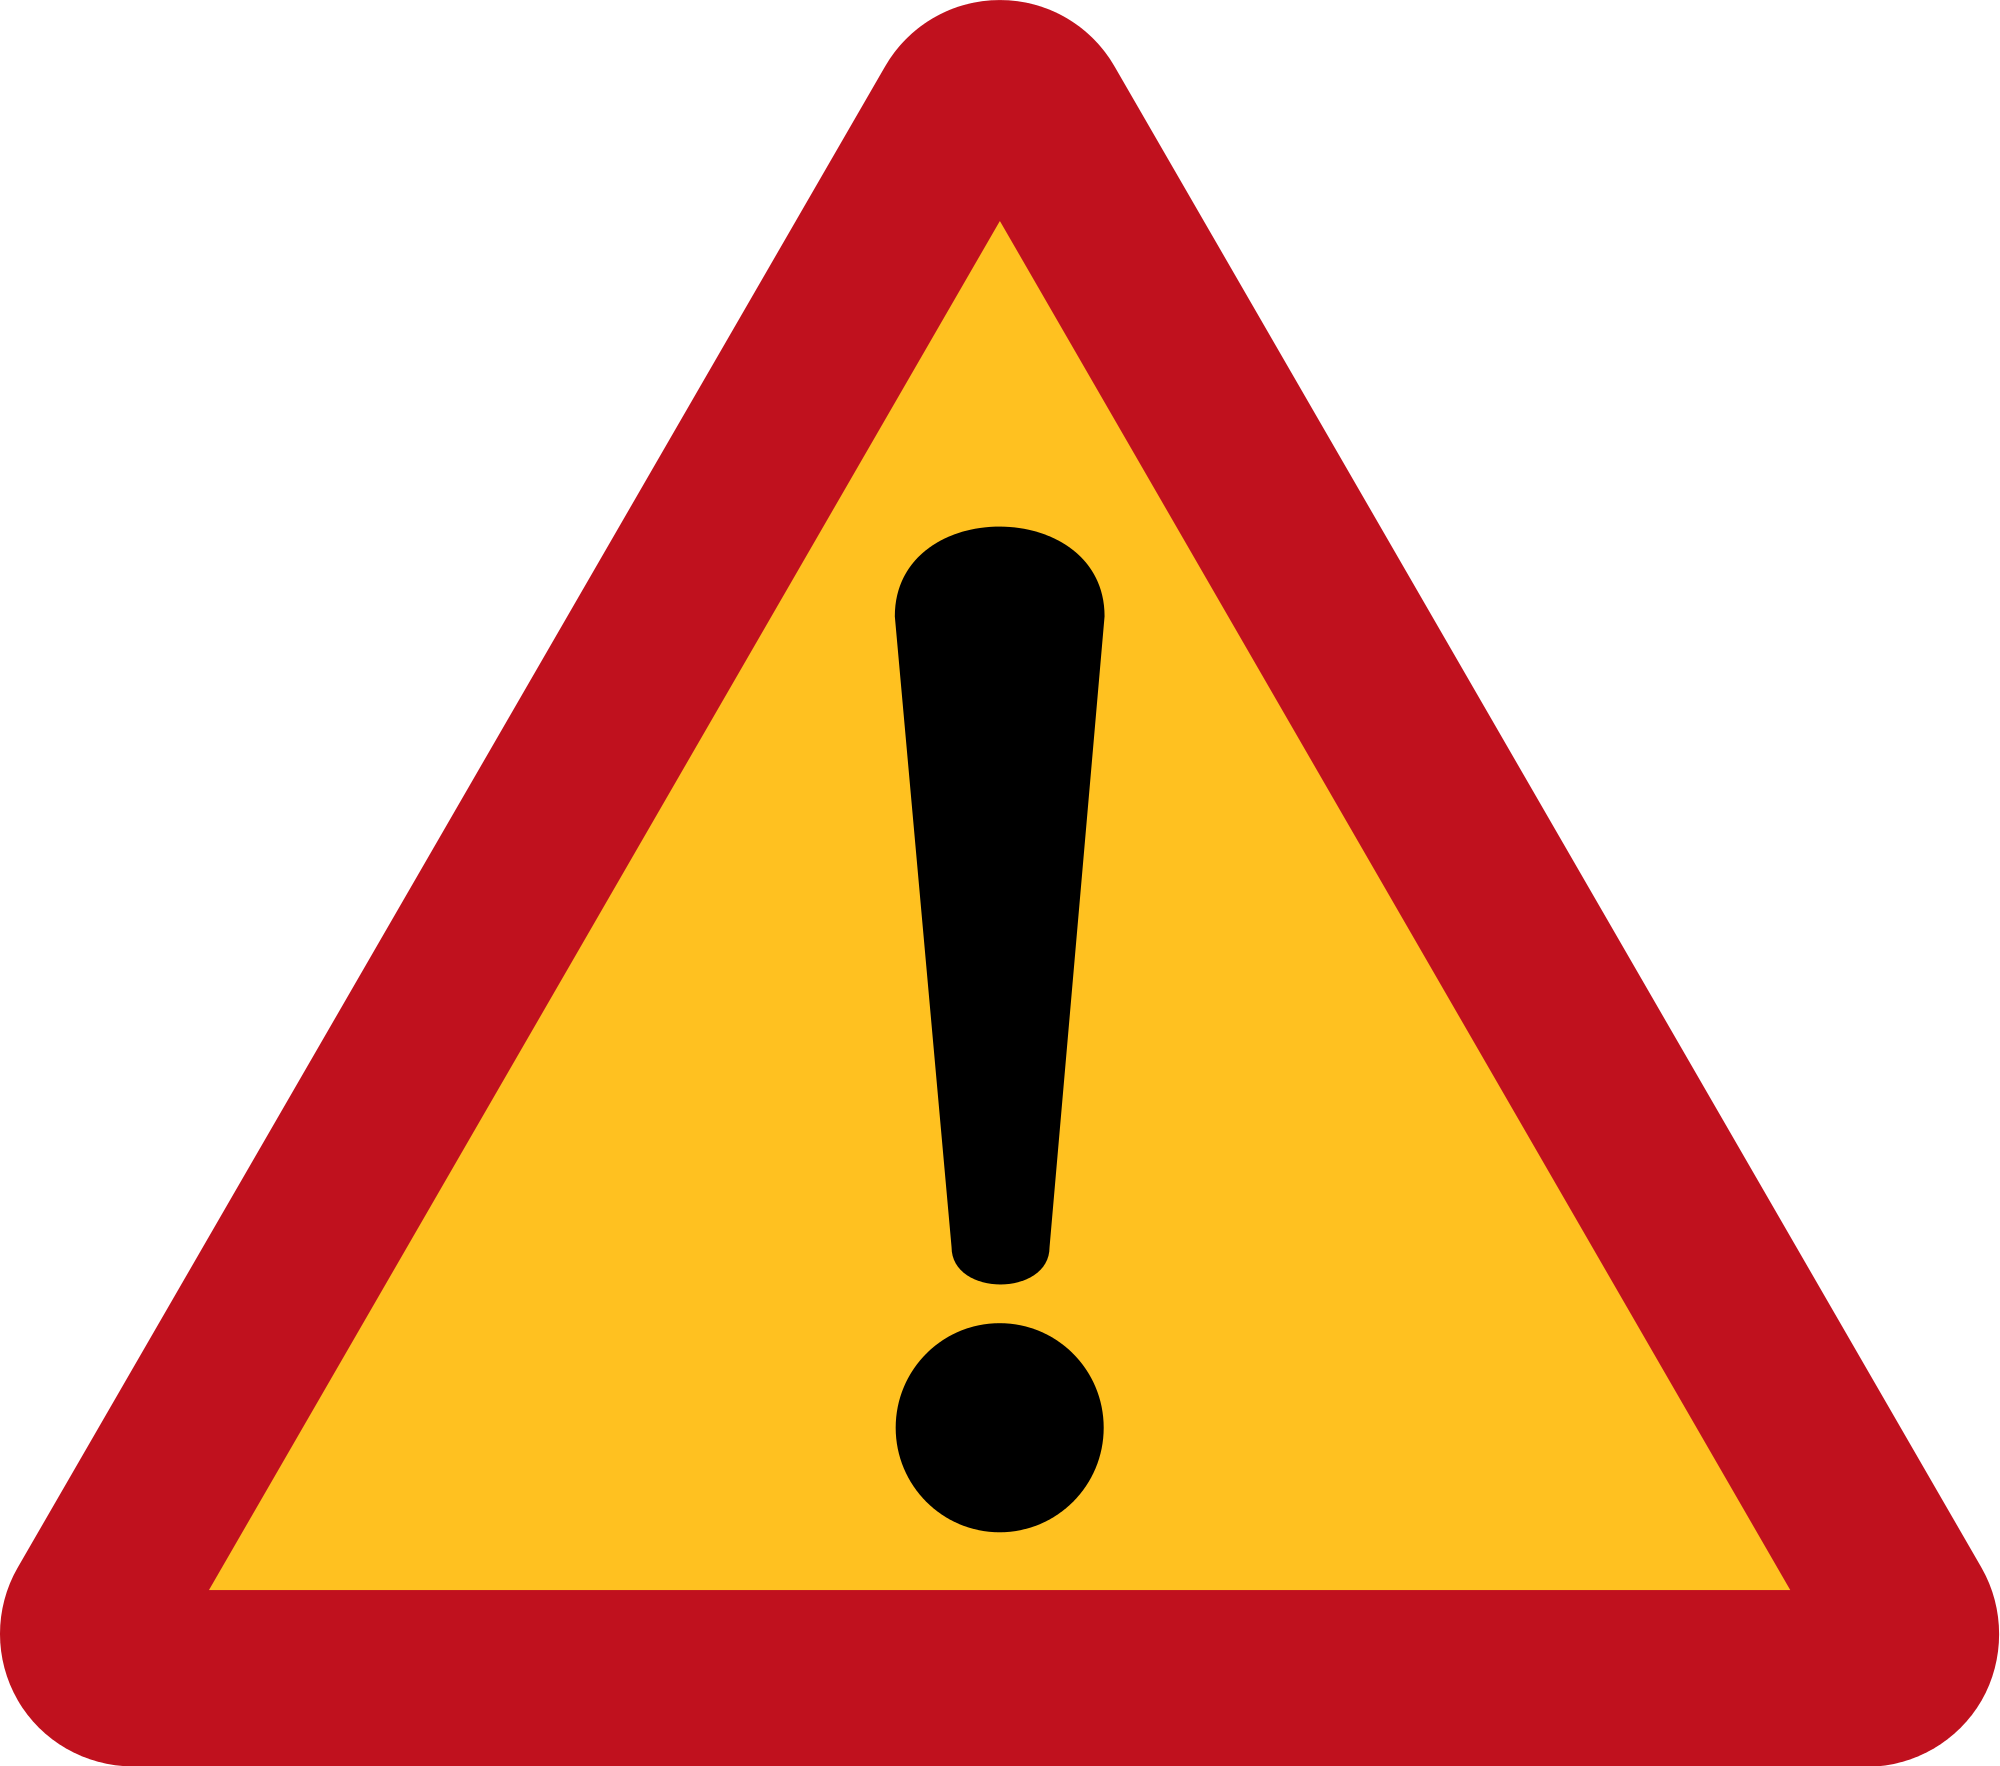 Warning01 - Danger Sign On Road (2000x1766)